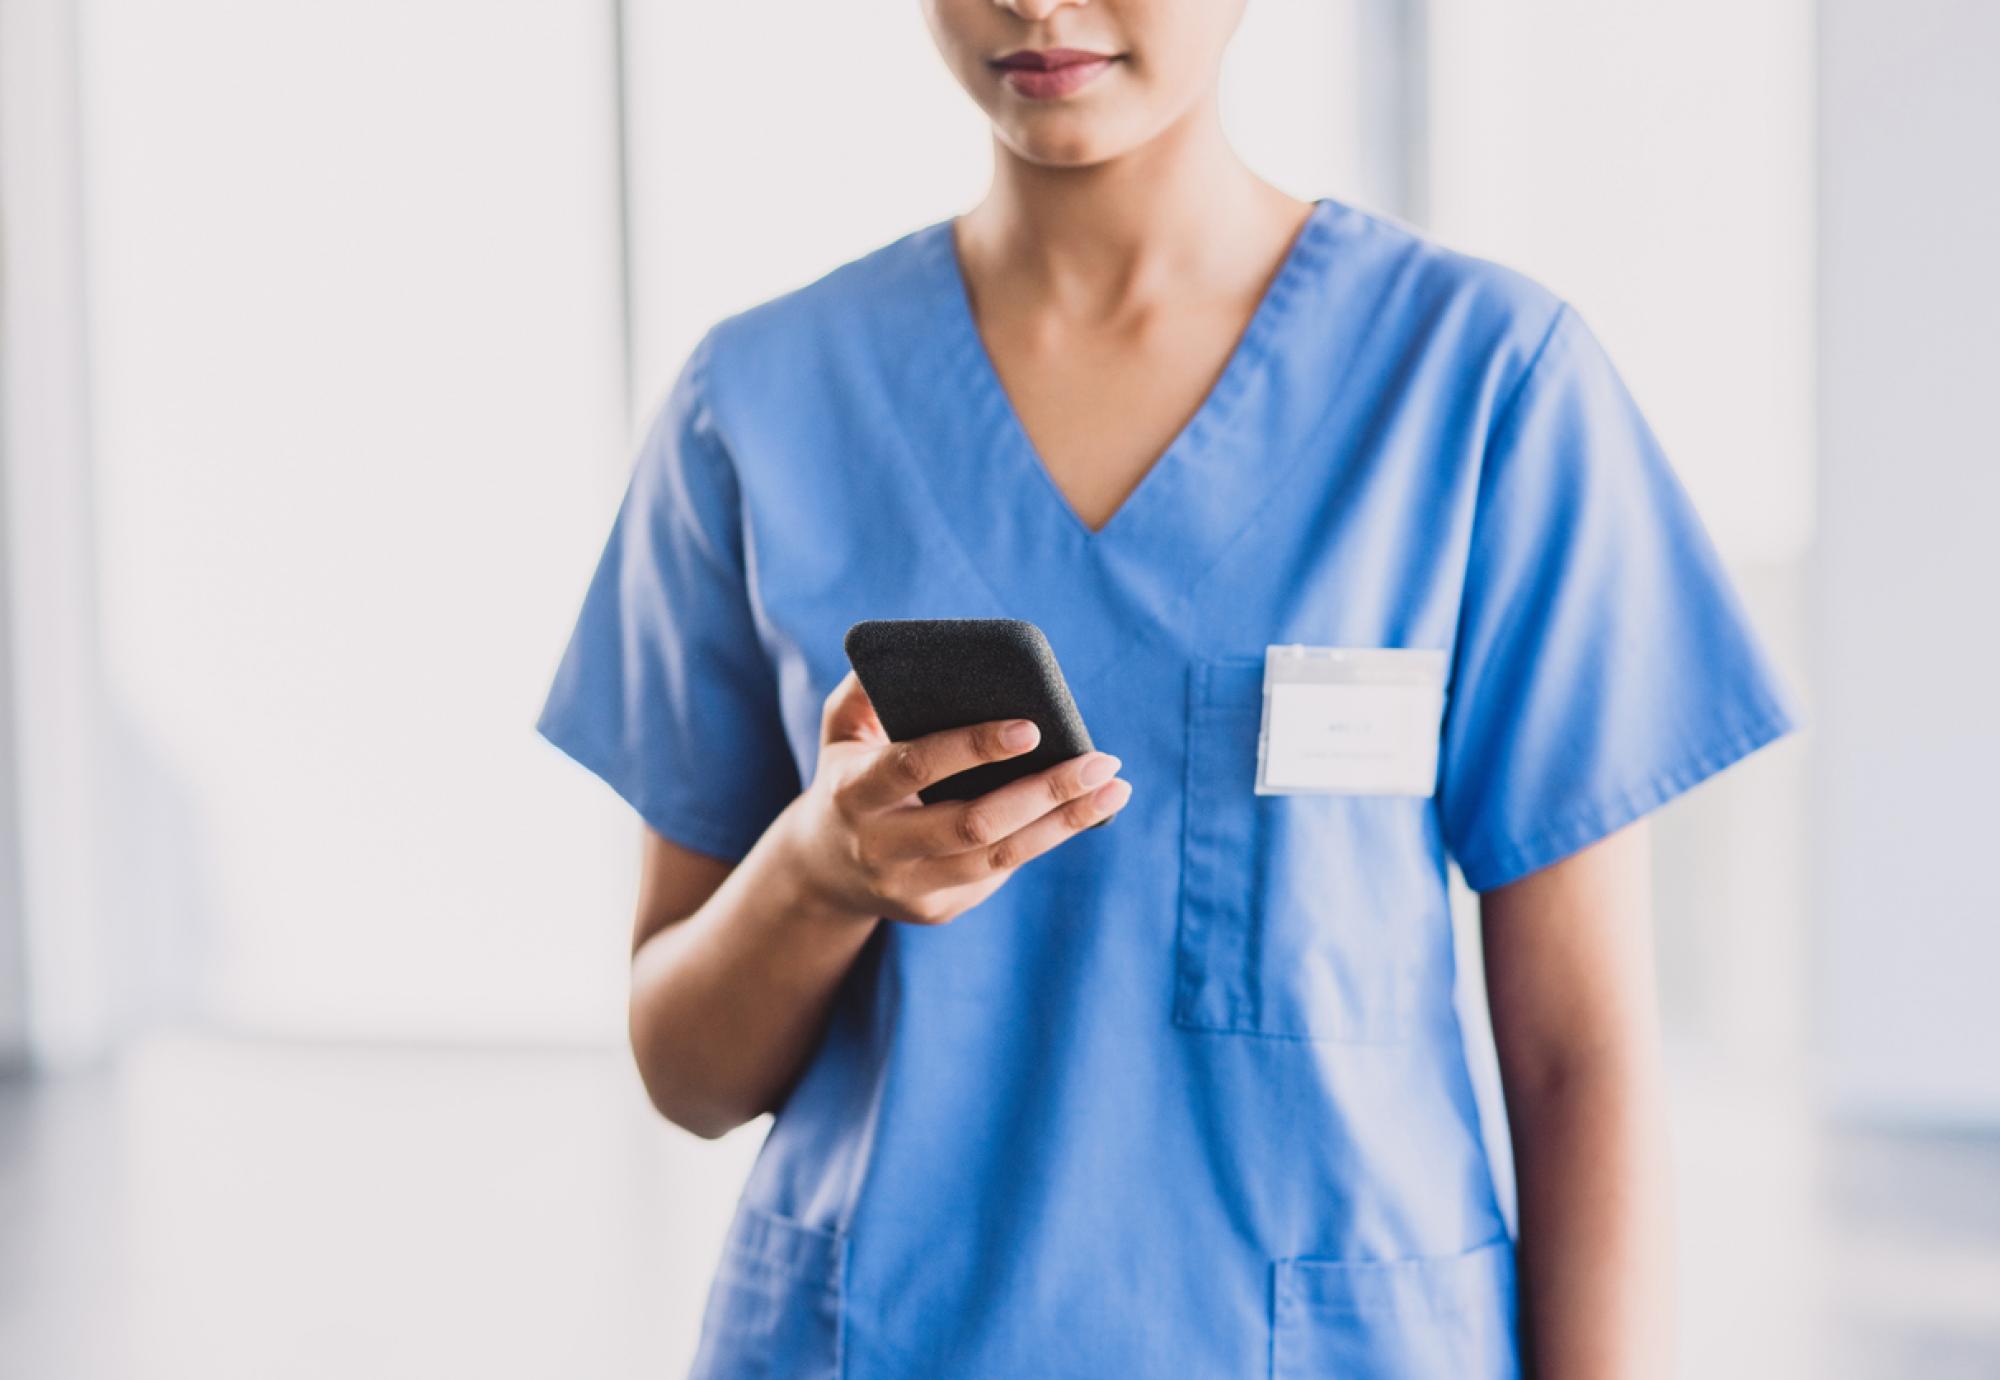 Nurse with phone